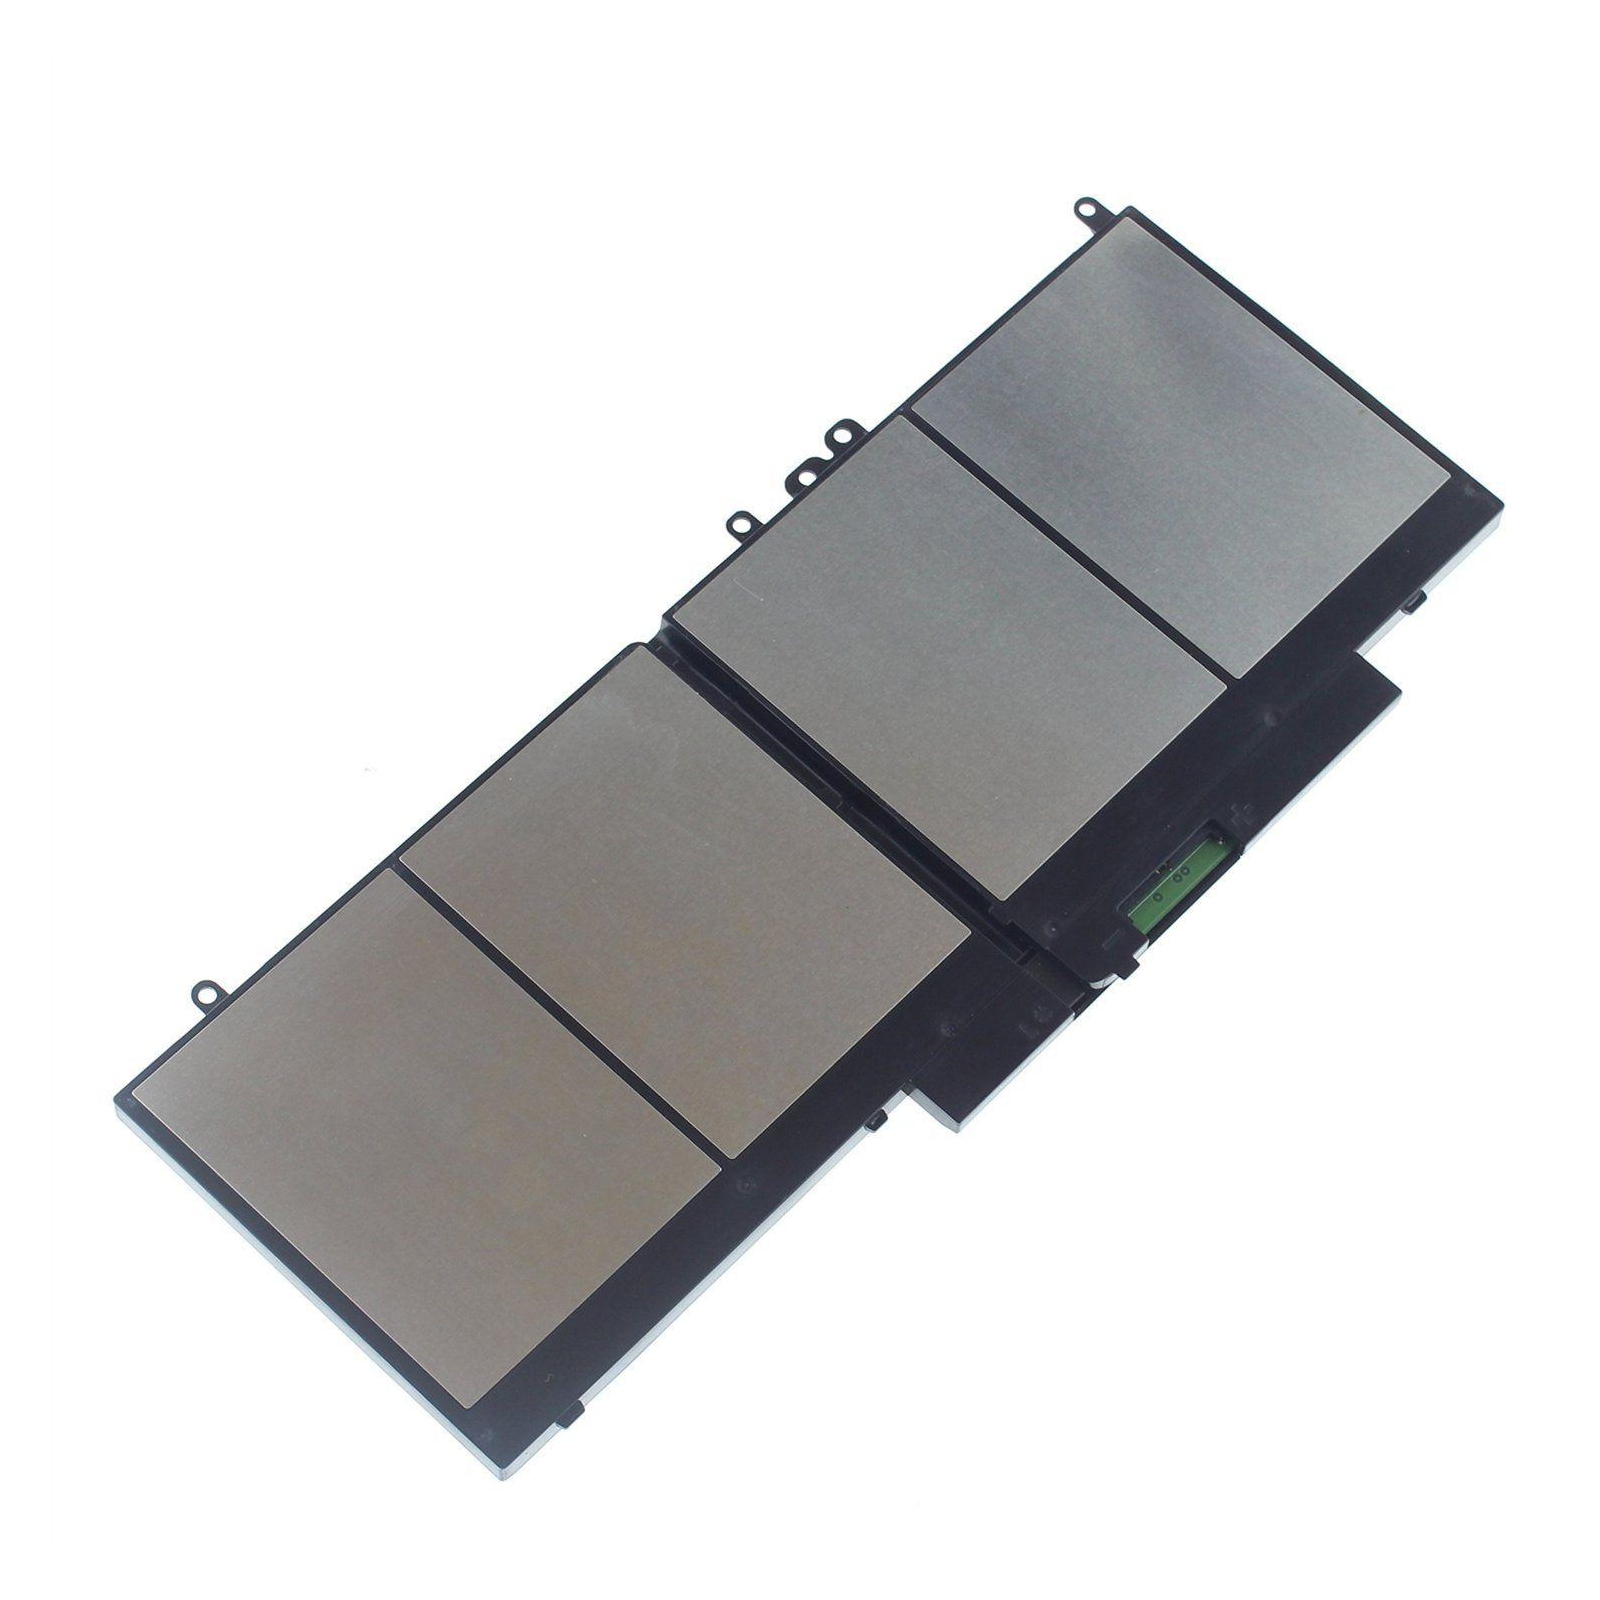 Аккумулятор для ноутбука Dell Latitude E5550 G5M10, 6860mAh (51Wh), 6cell, 7.4V (A47175) изображение 3